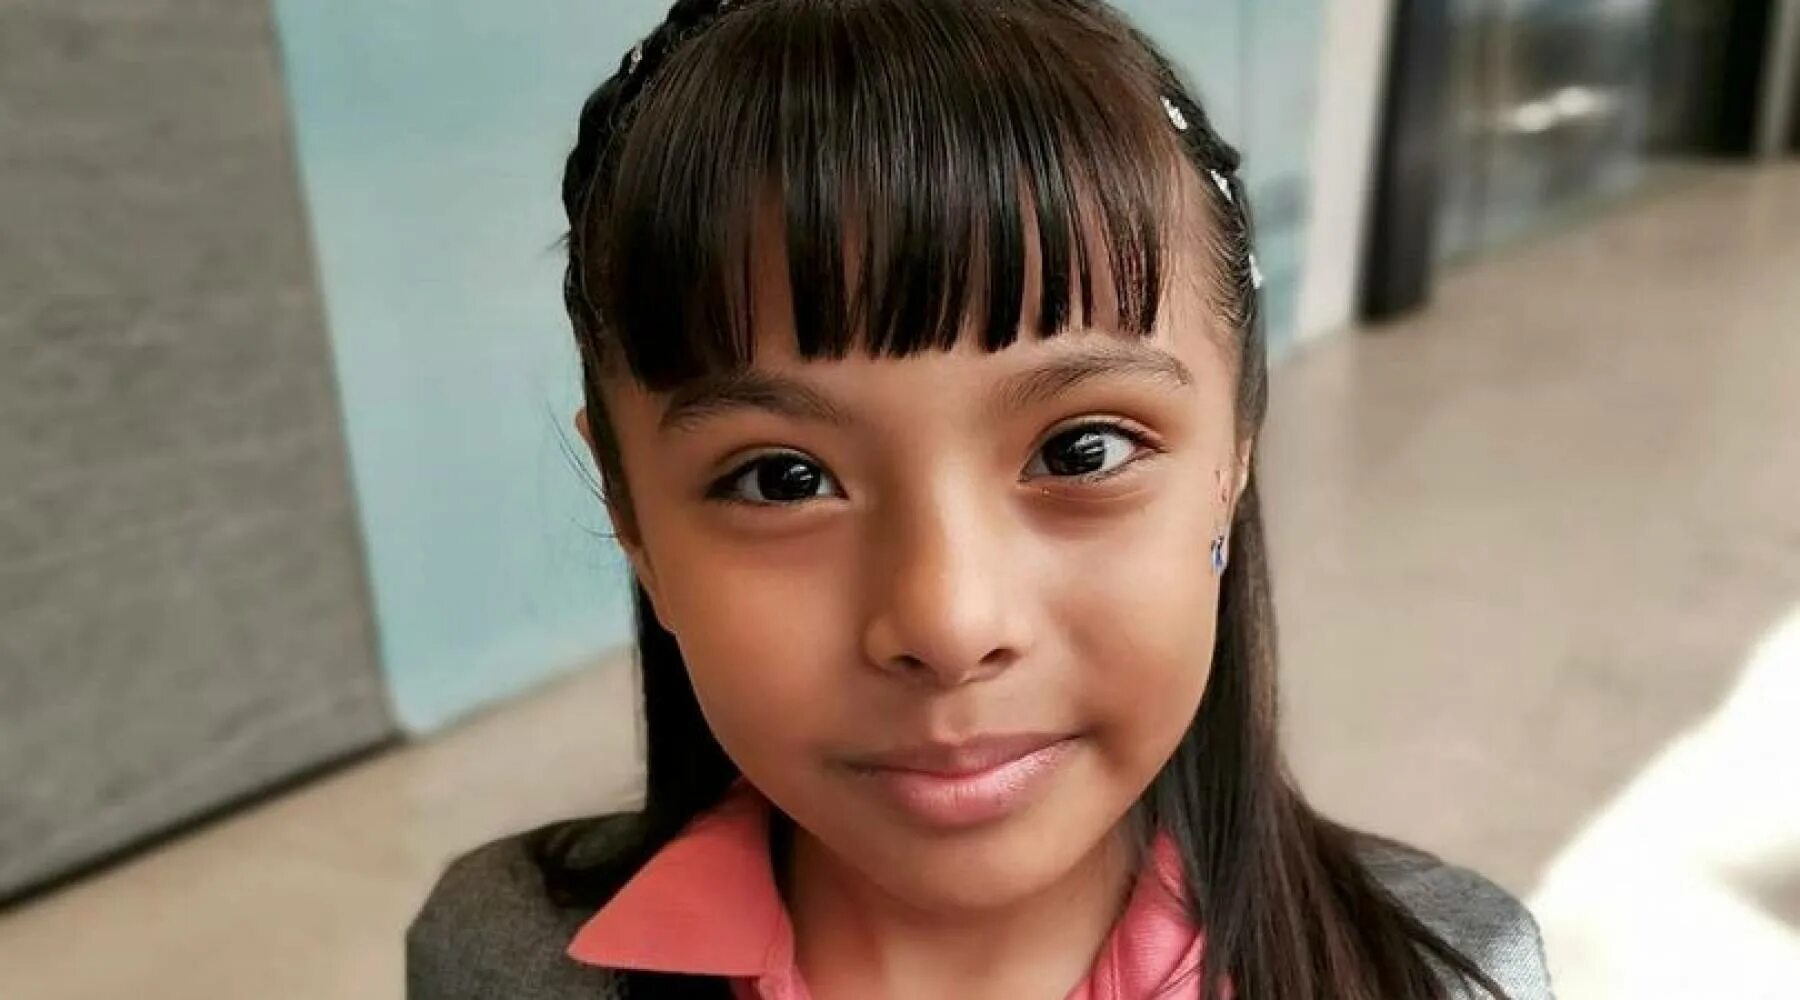 Адхара Перес Санчес. Девочка с аутизмом. Девочка из Мексики. Мексикансканка девочка 10 лет.